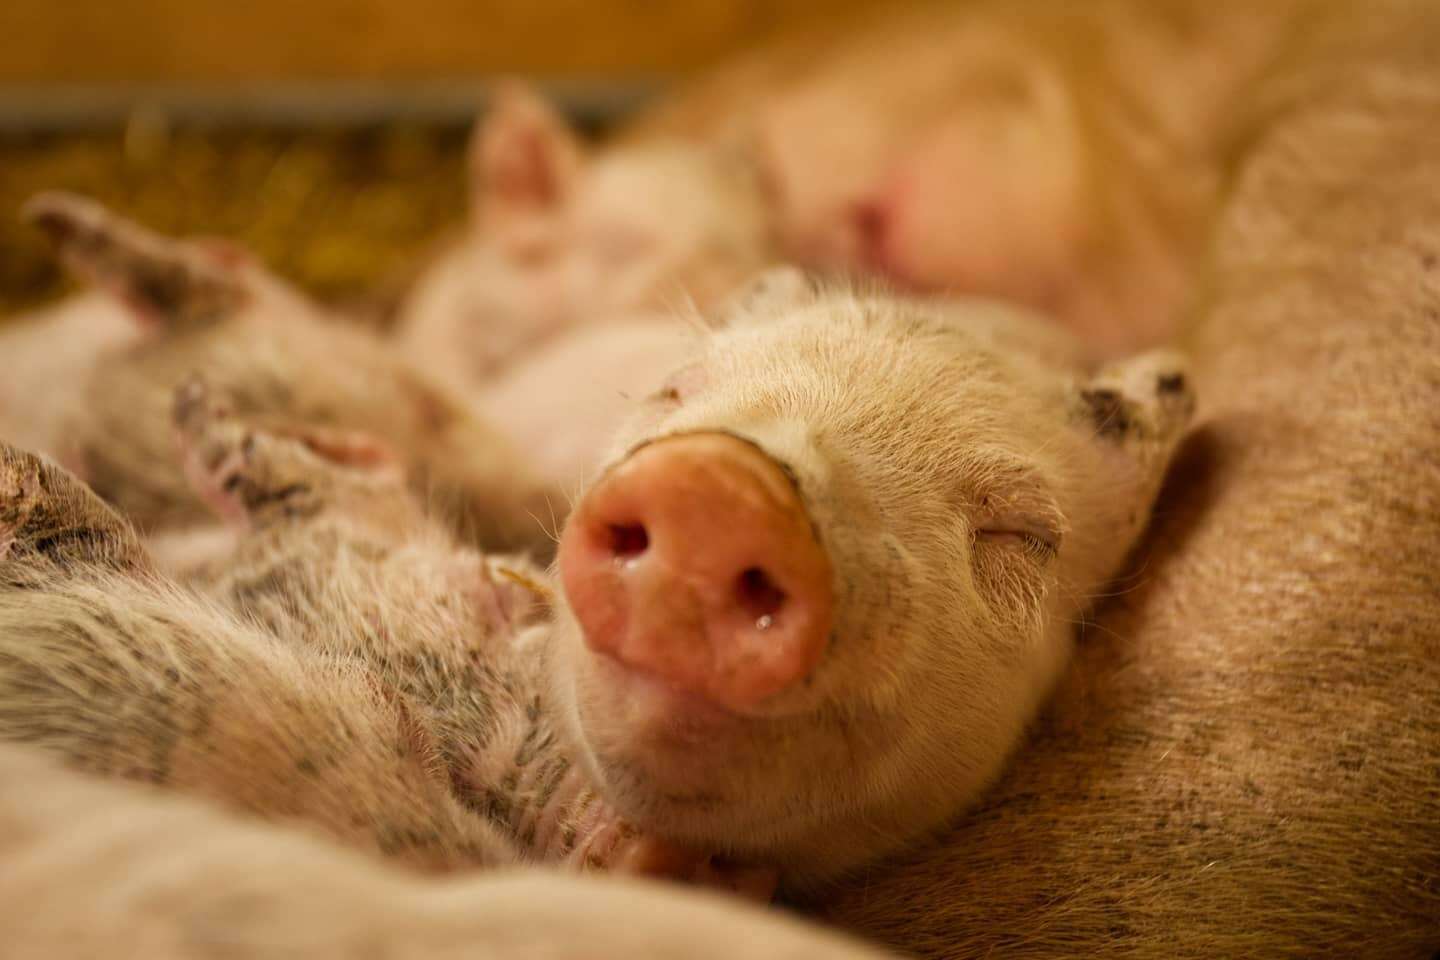 Rescued piglet smiles at sanctuary